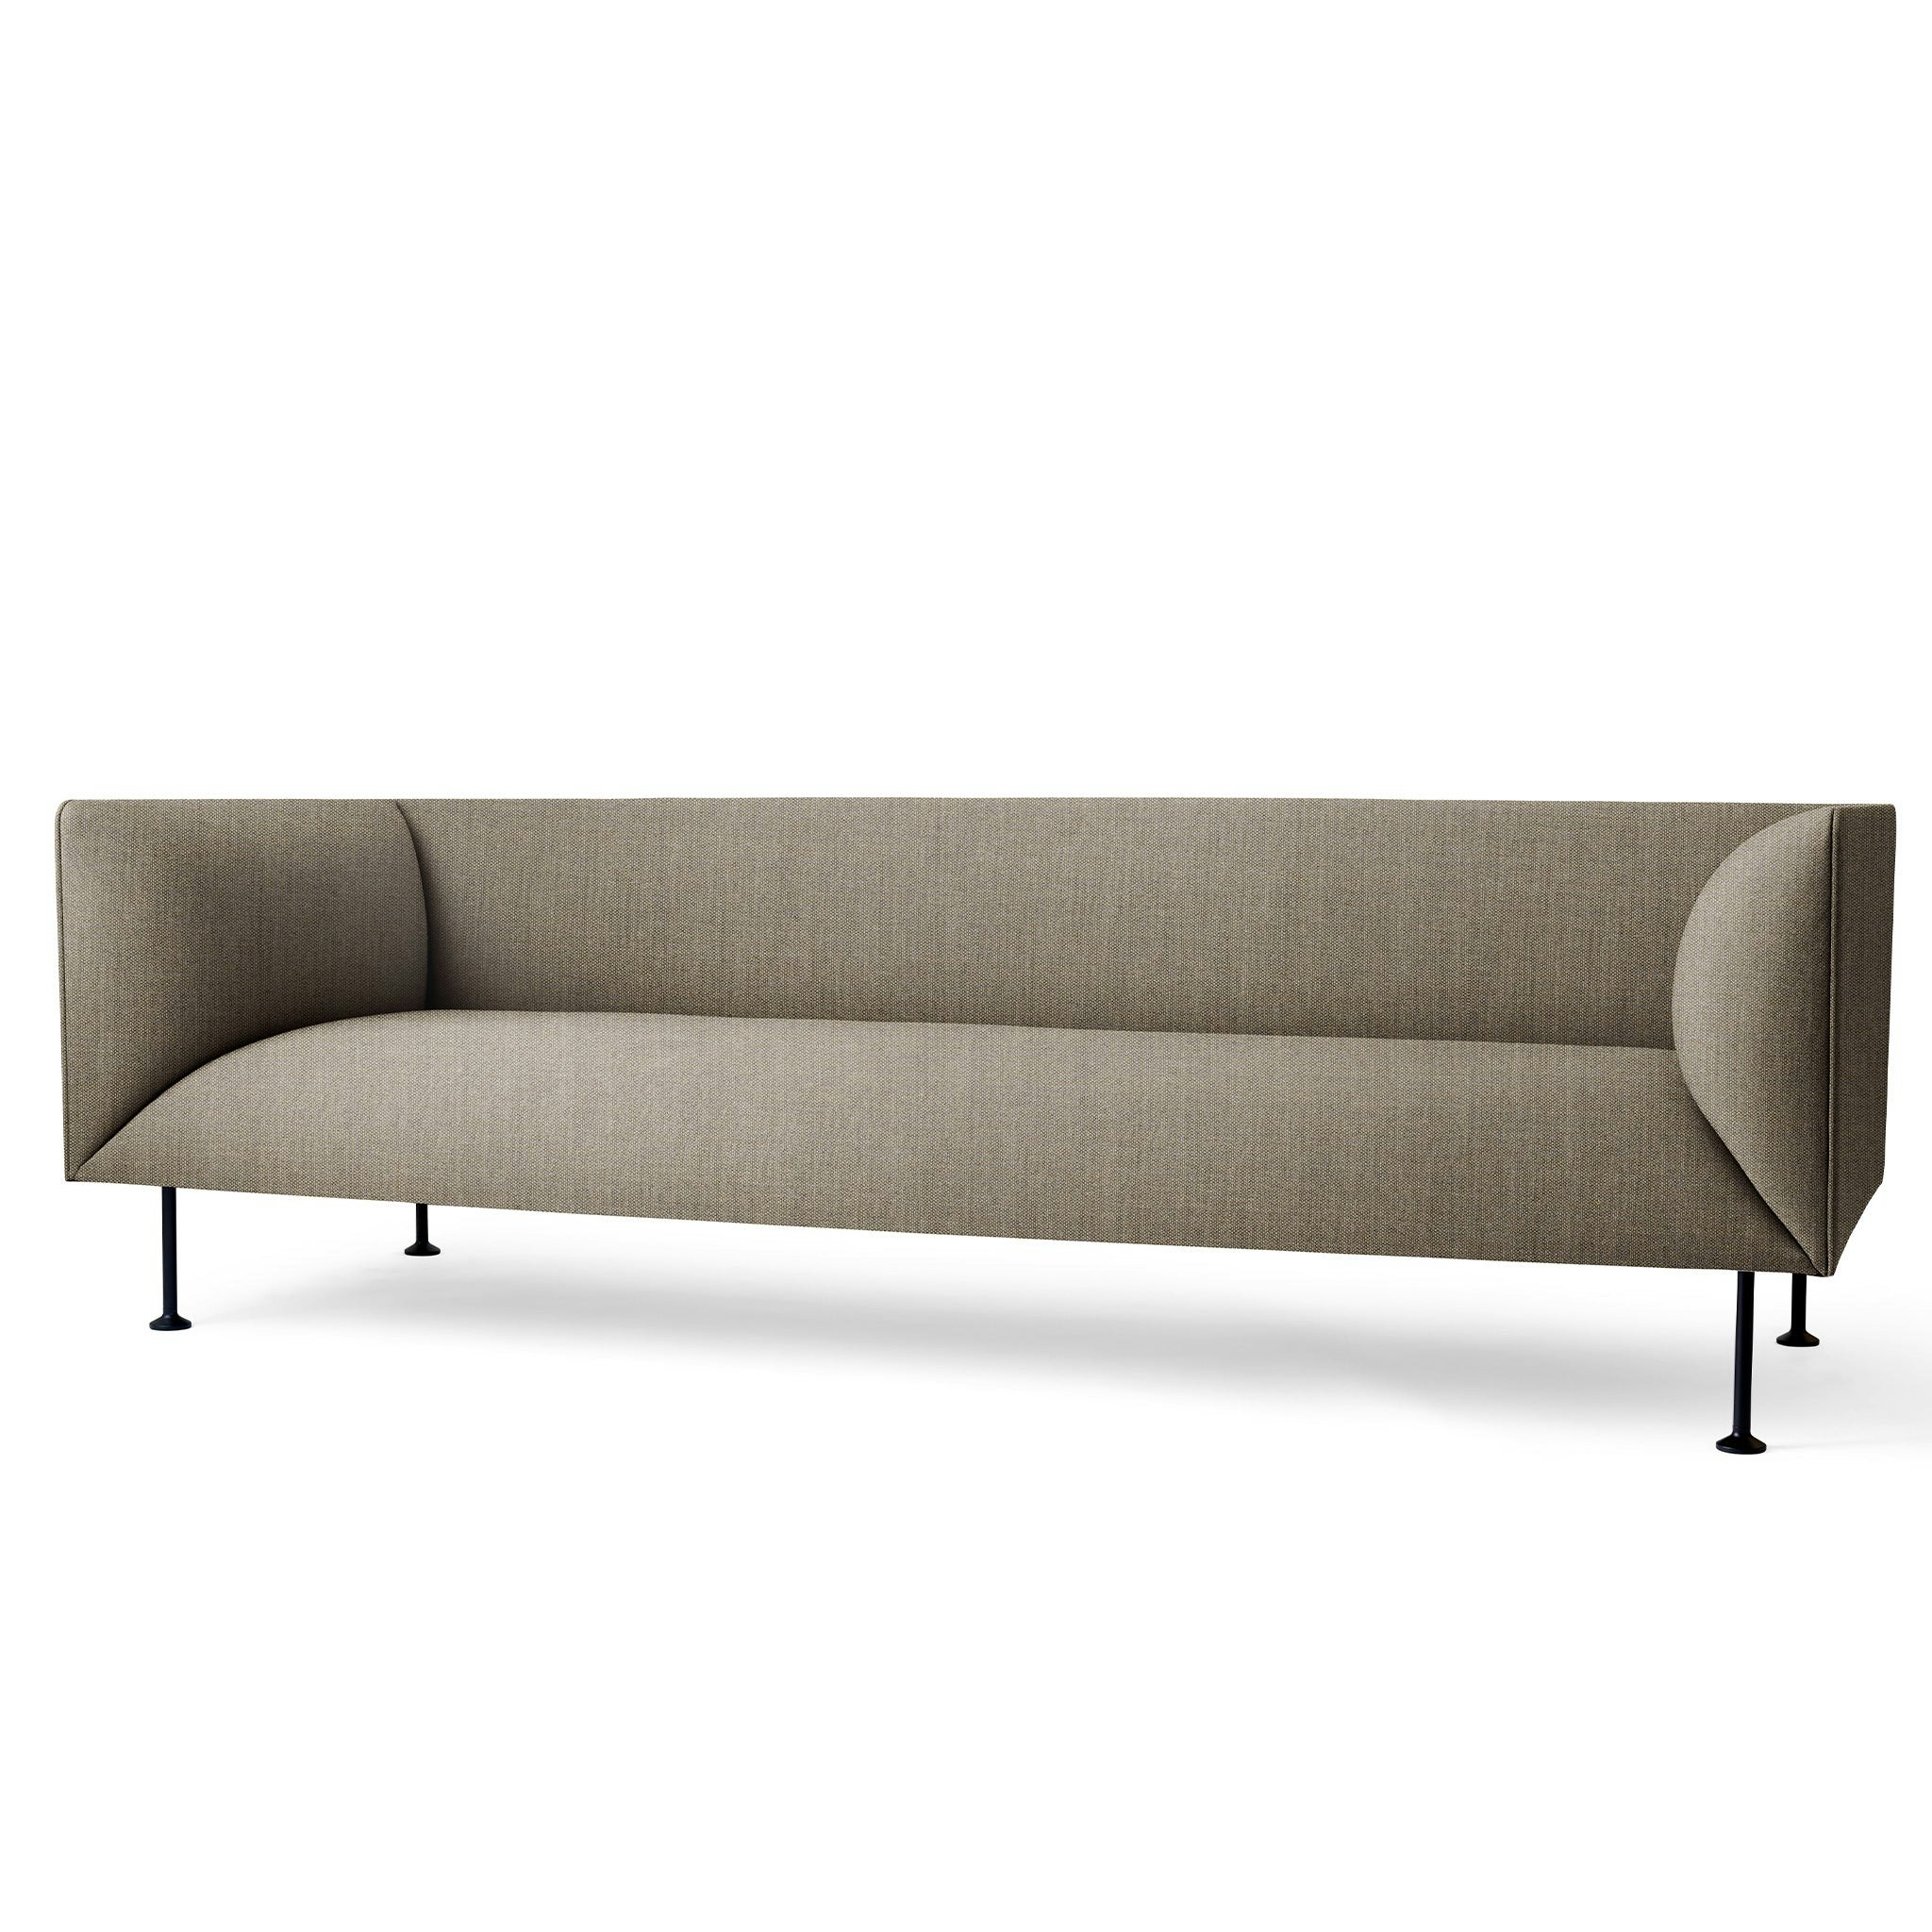 Godot 3-Seater Sofa by Menu